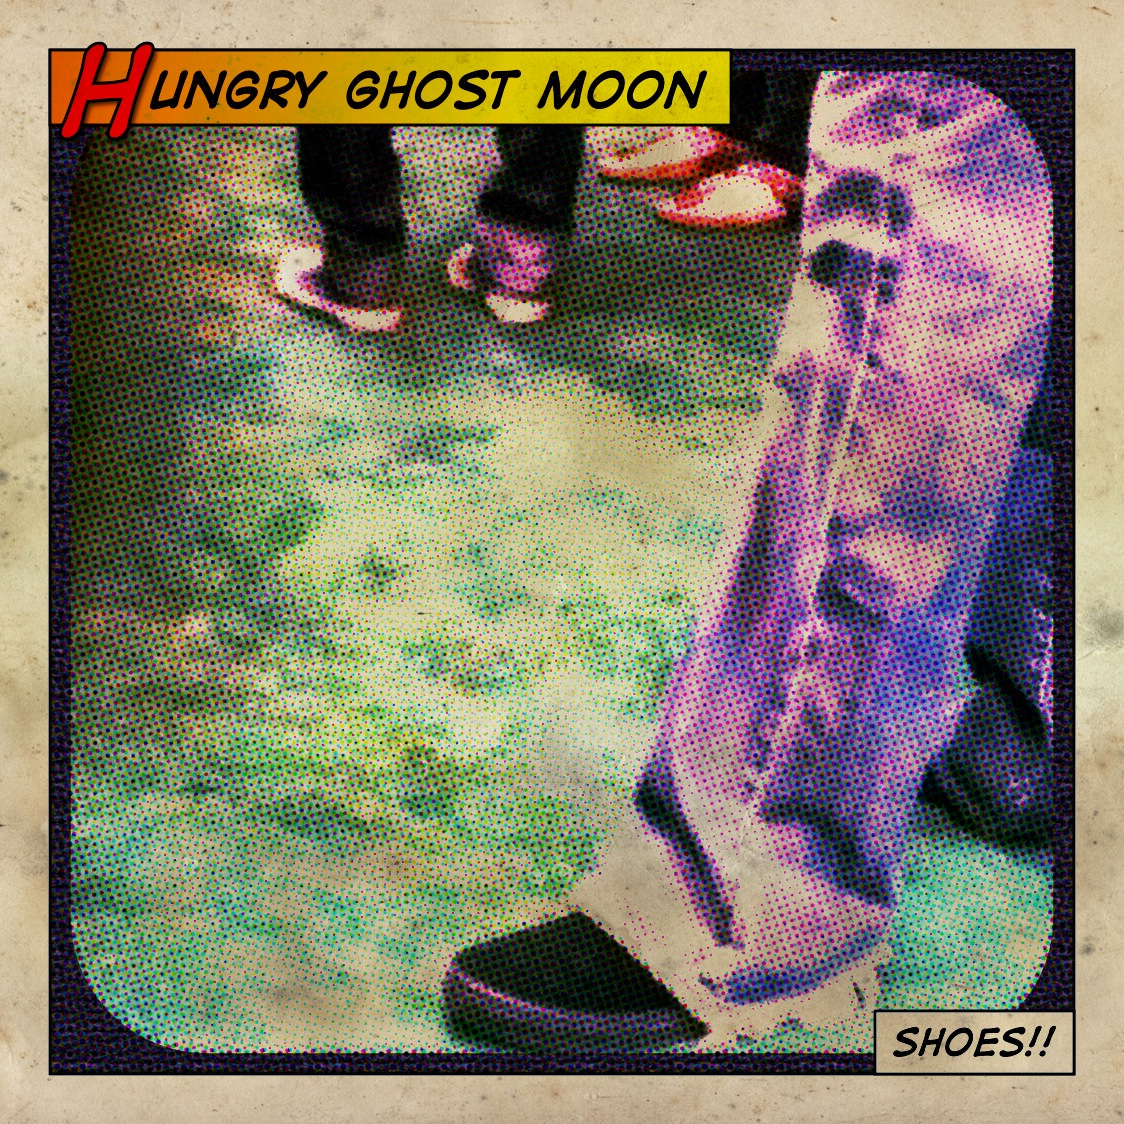 Black Phoenix Alchemy Lab | Hungry Ghost Moon